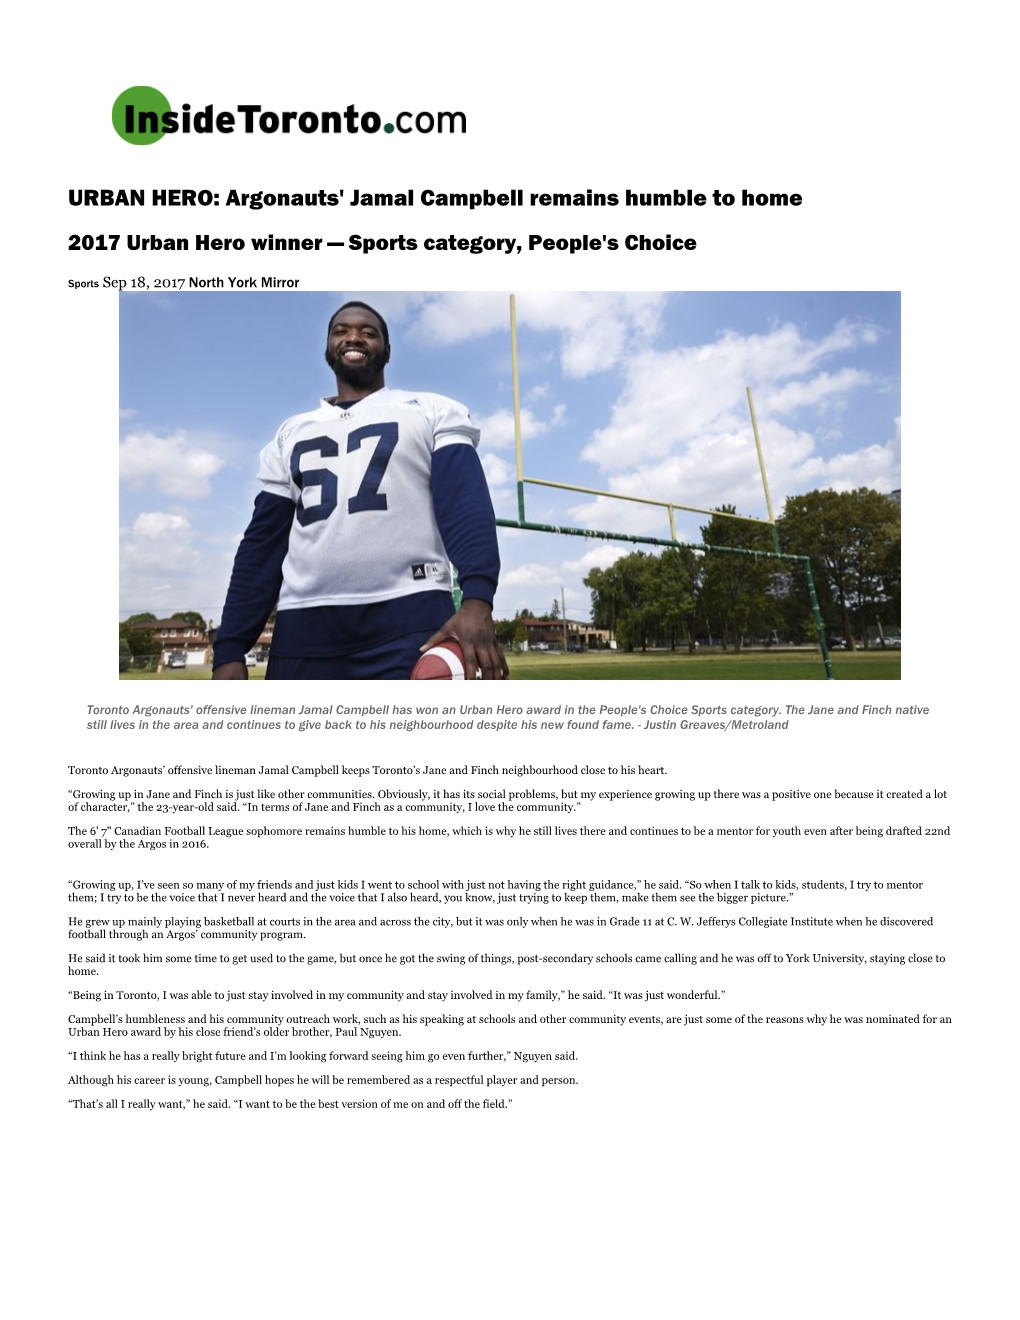 URBAN HERO: Argonauts' Jamal Campbell Remains Humble to Home 2017 Urban Hero Winner — Sports Category, People's Choice